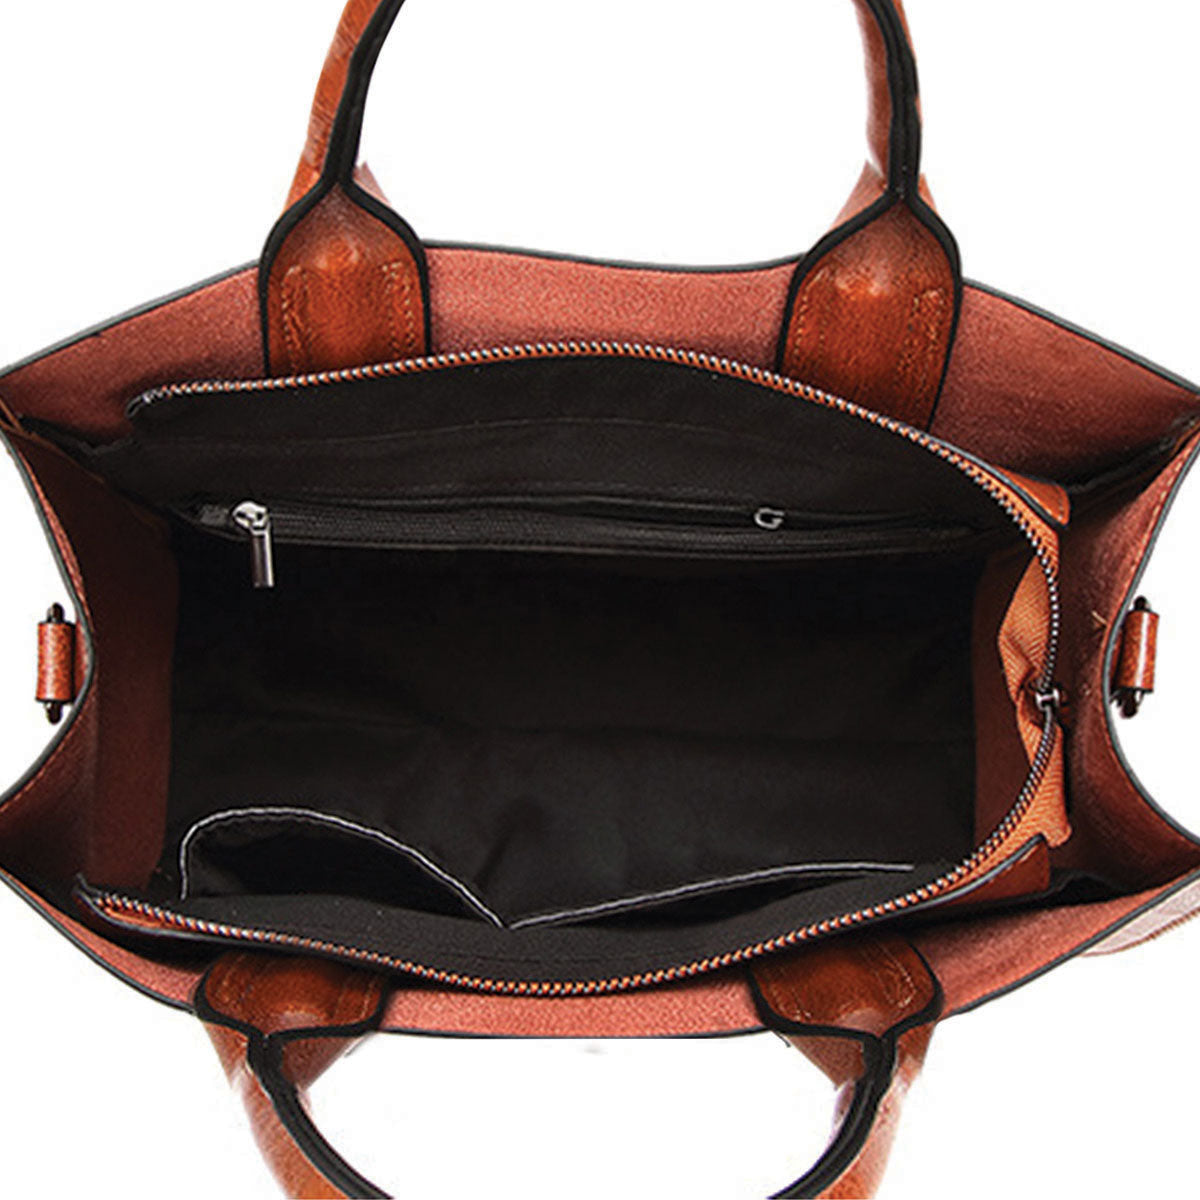 Your Best Companion - Cavalier King Charles Spaniel Luxury Handbag V3